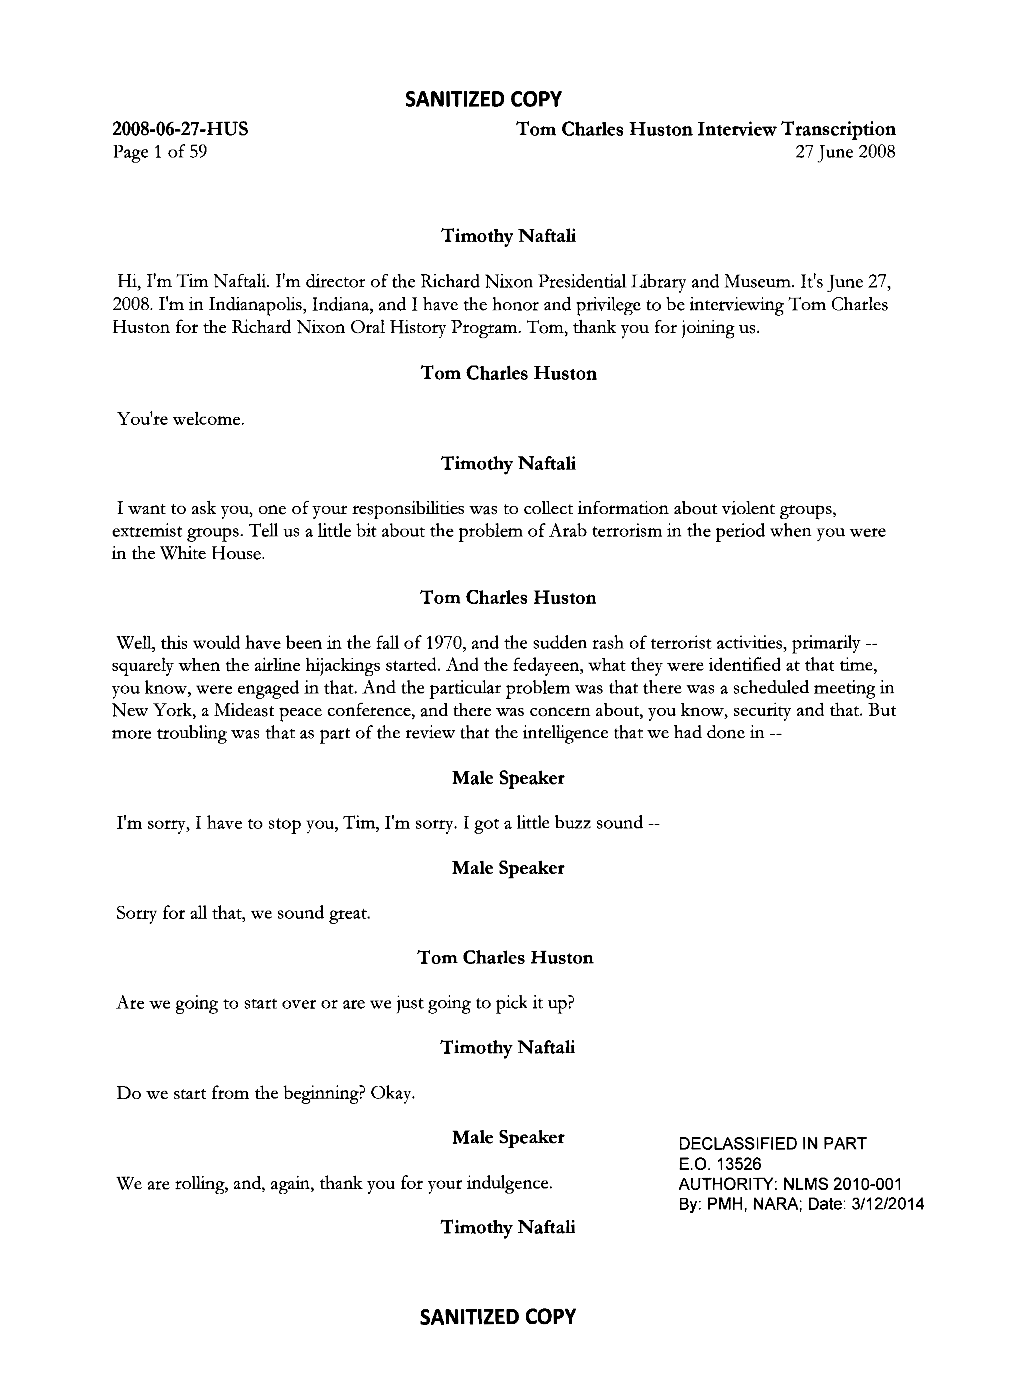 Tom Charles Lluston Interview Transcription Page 1 of 59 27 June 2008